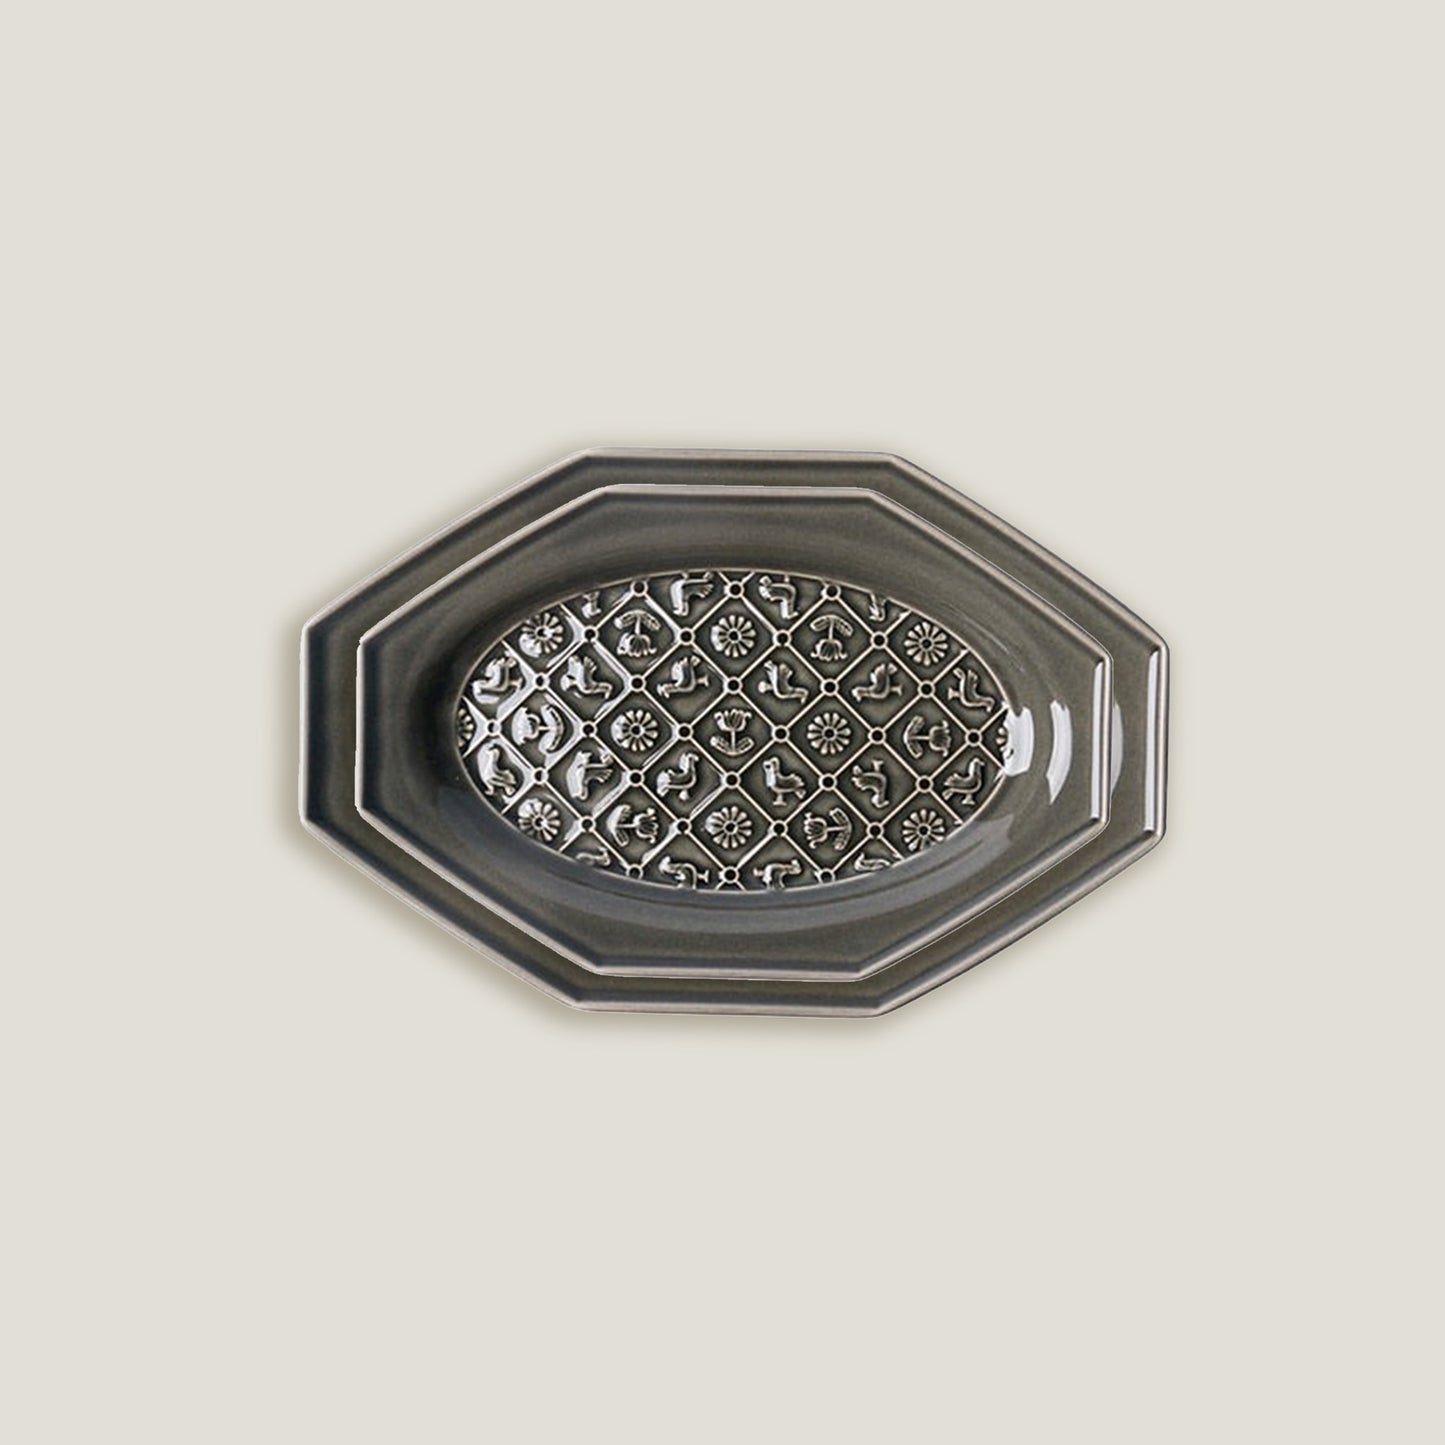 Gray Octagonal Ceramic Embossed Plates